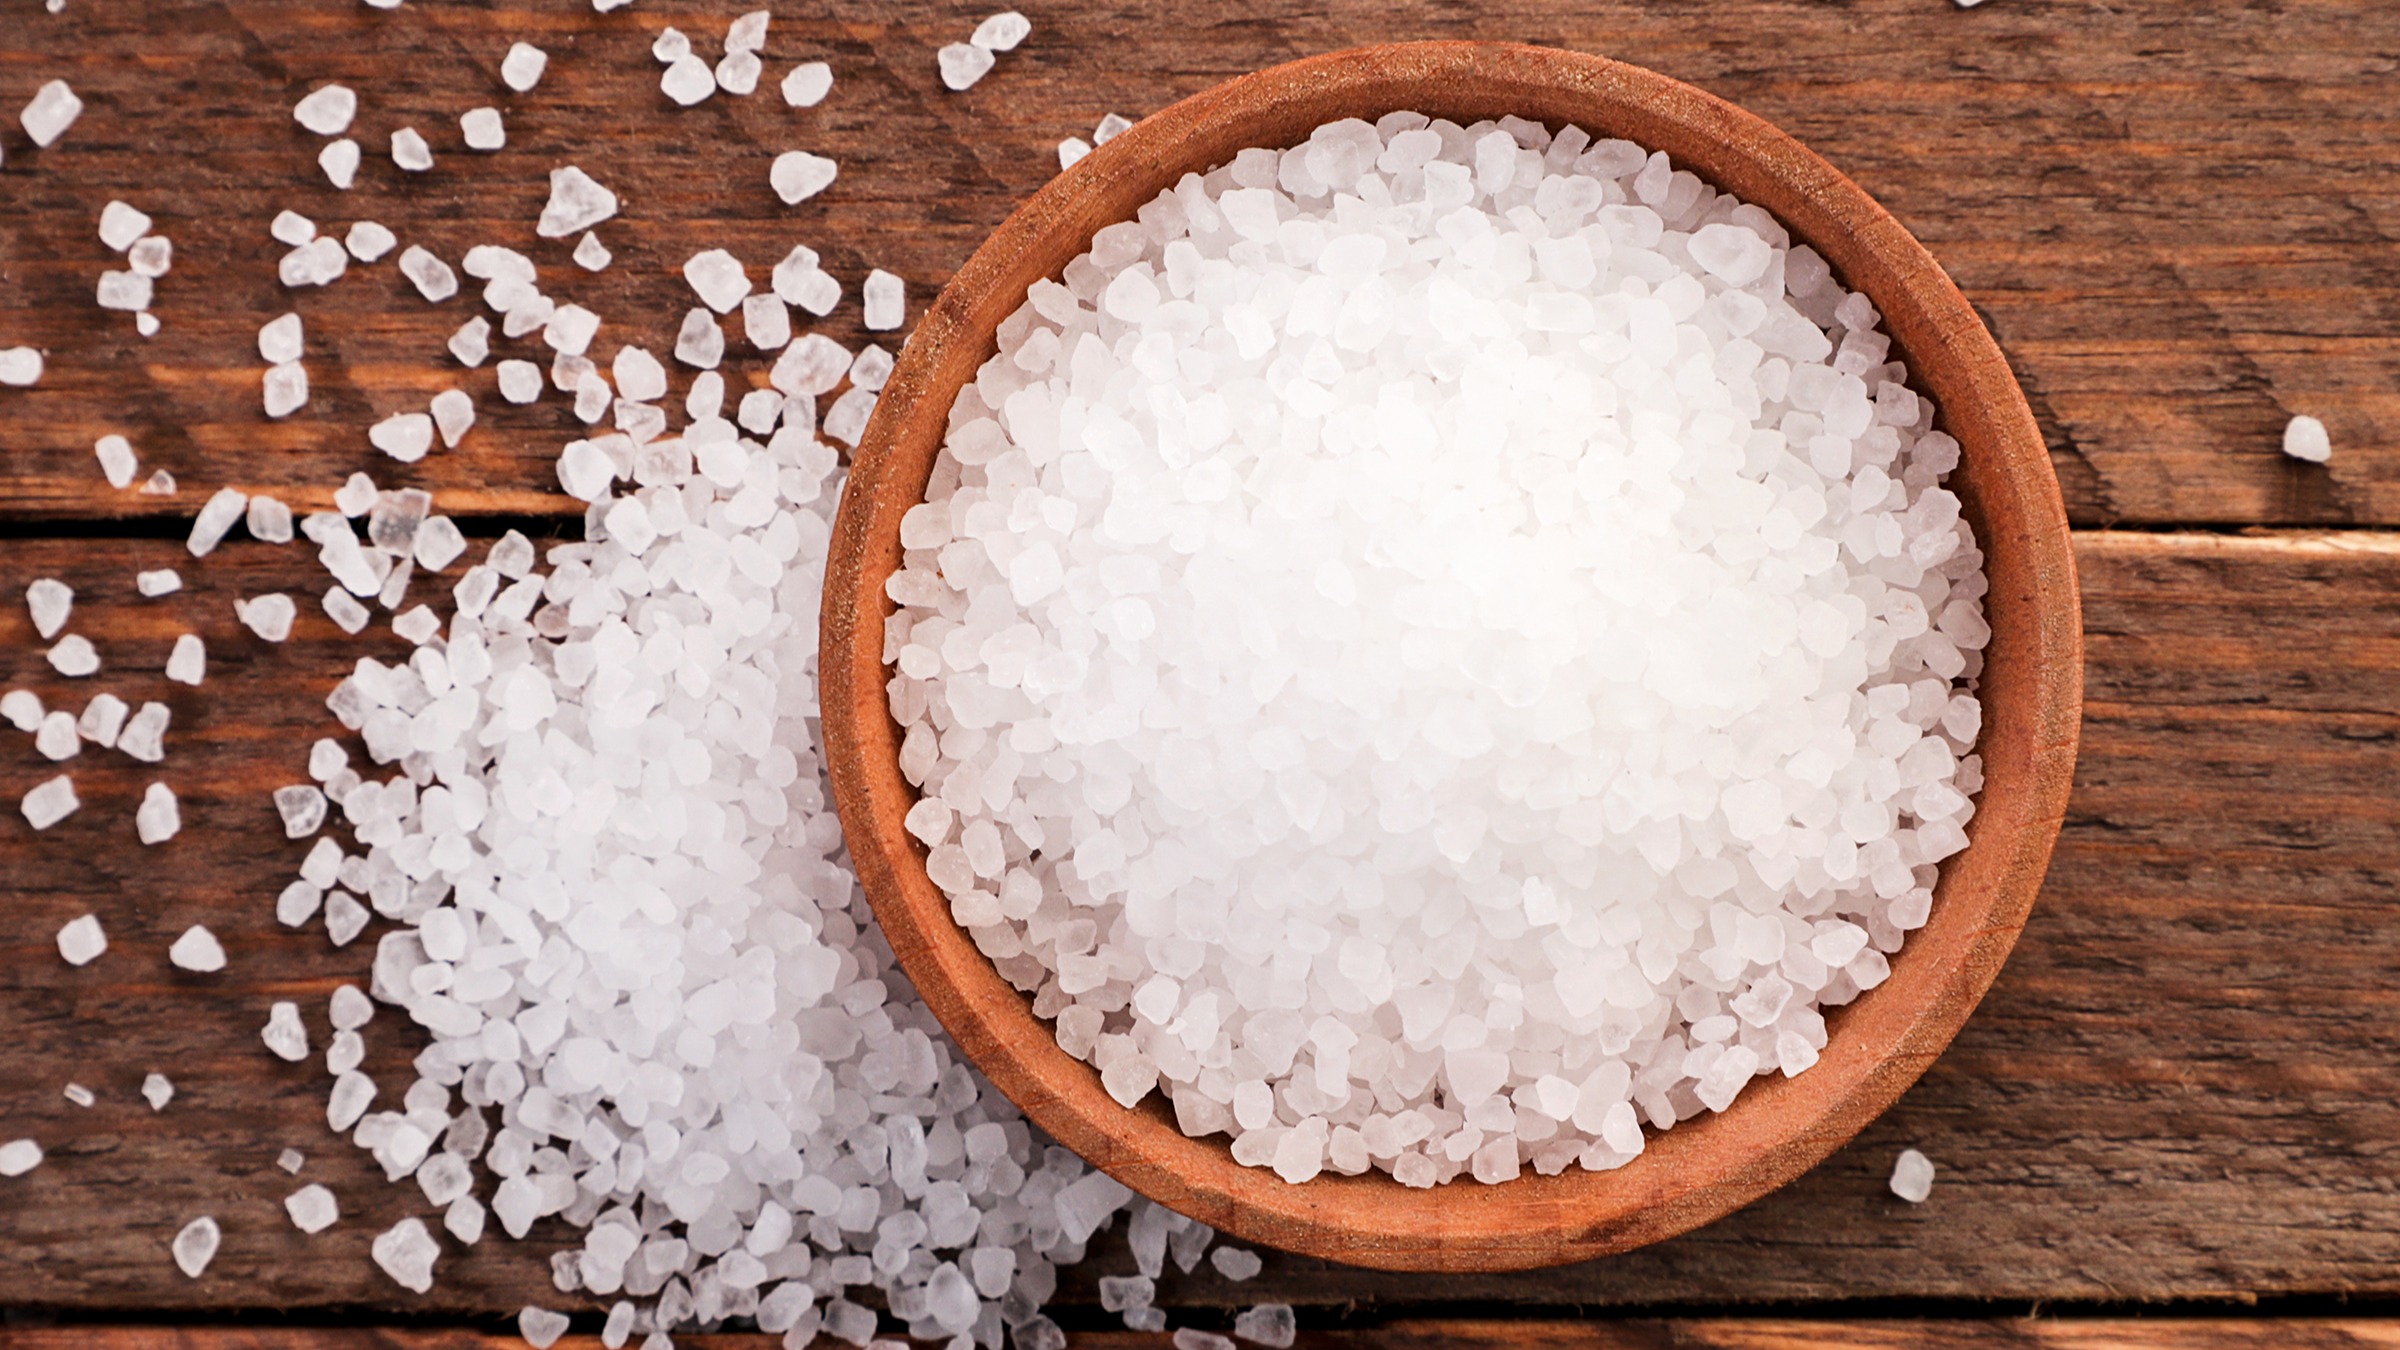 Sea salt vs. table salt: Differences and health benefits